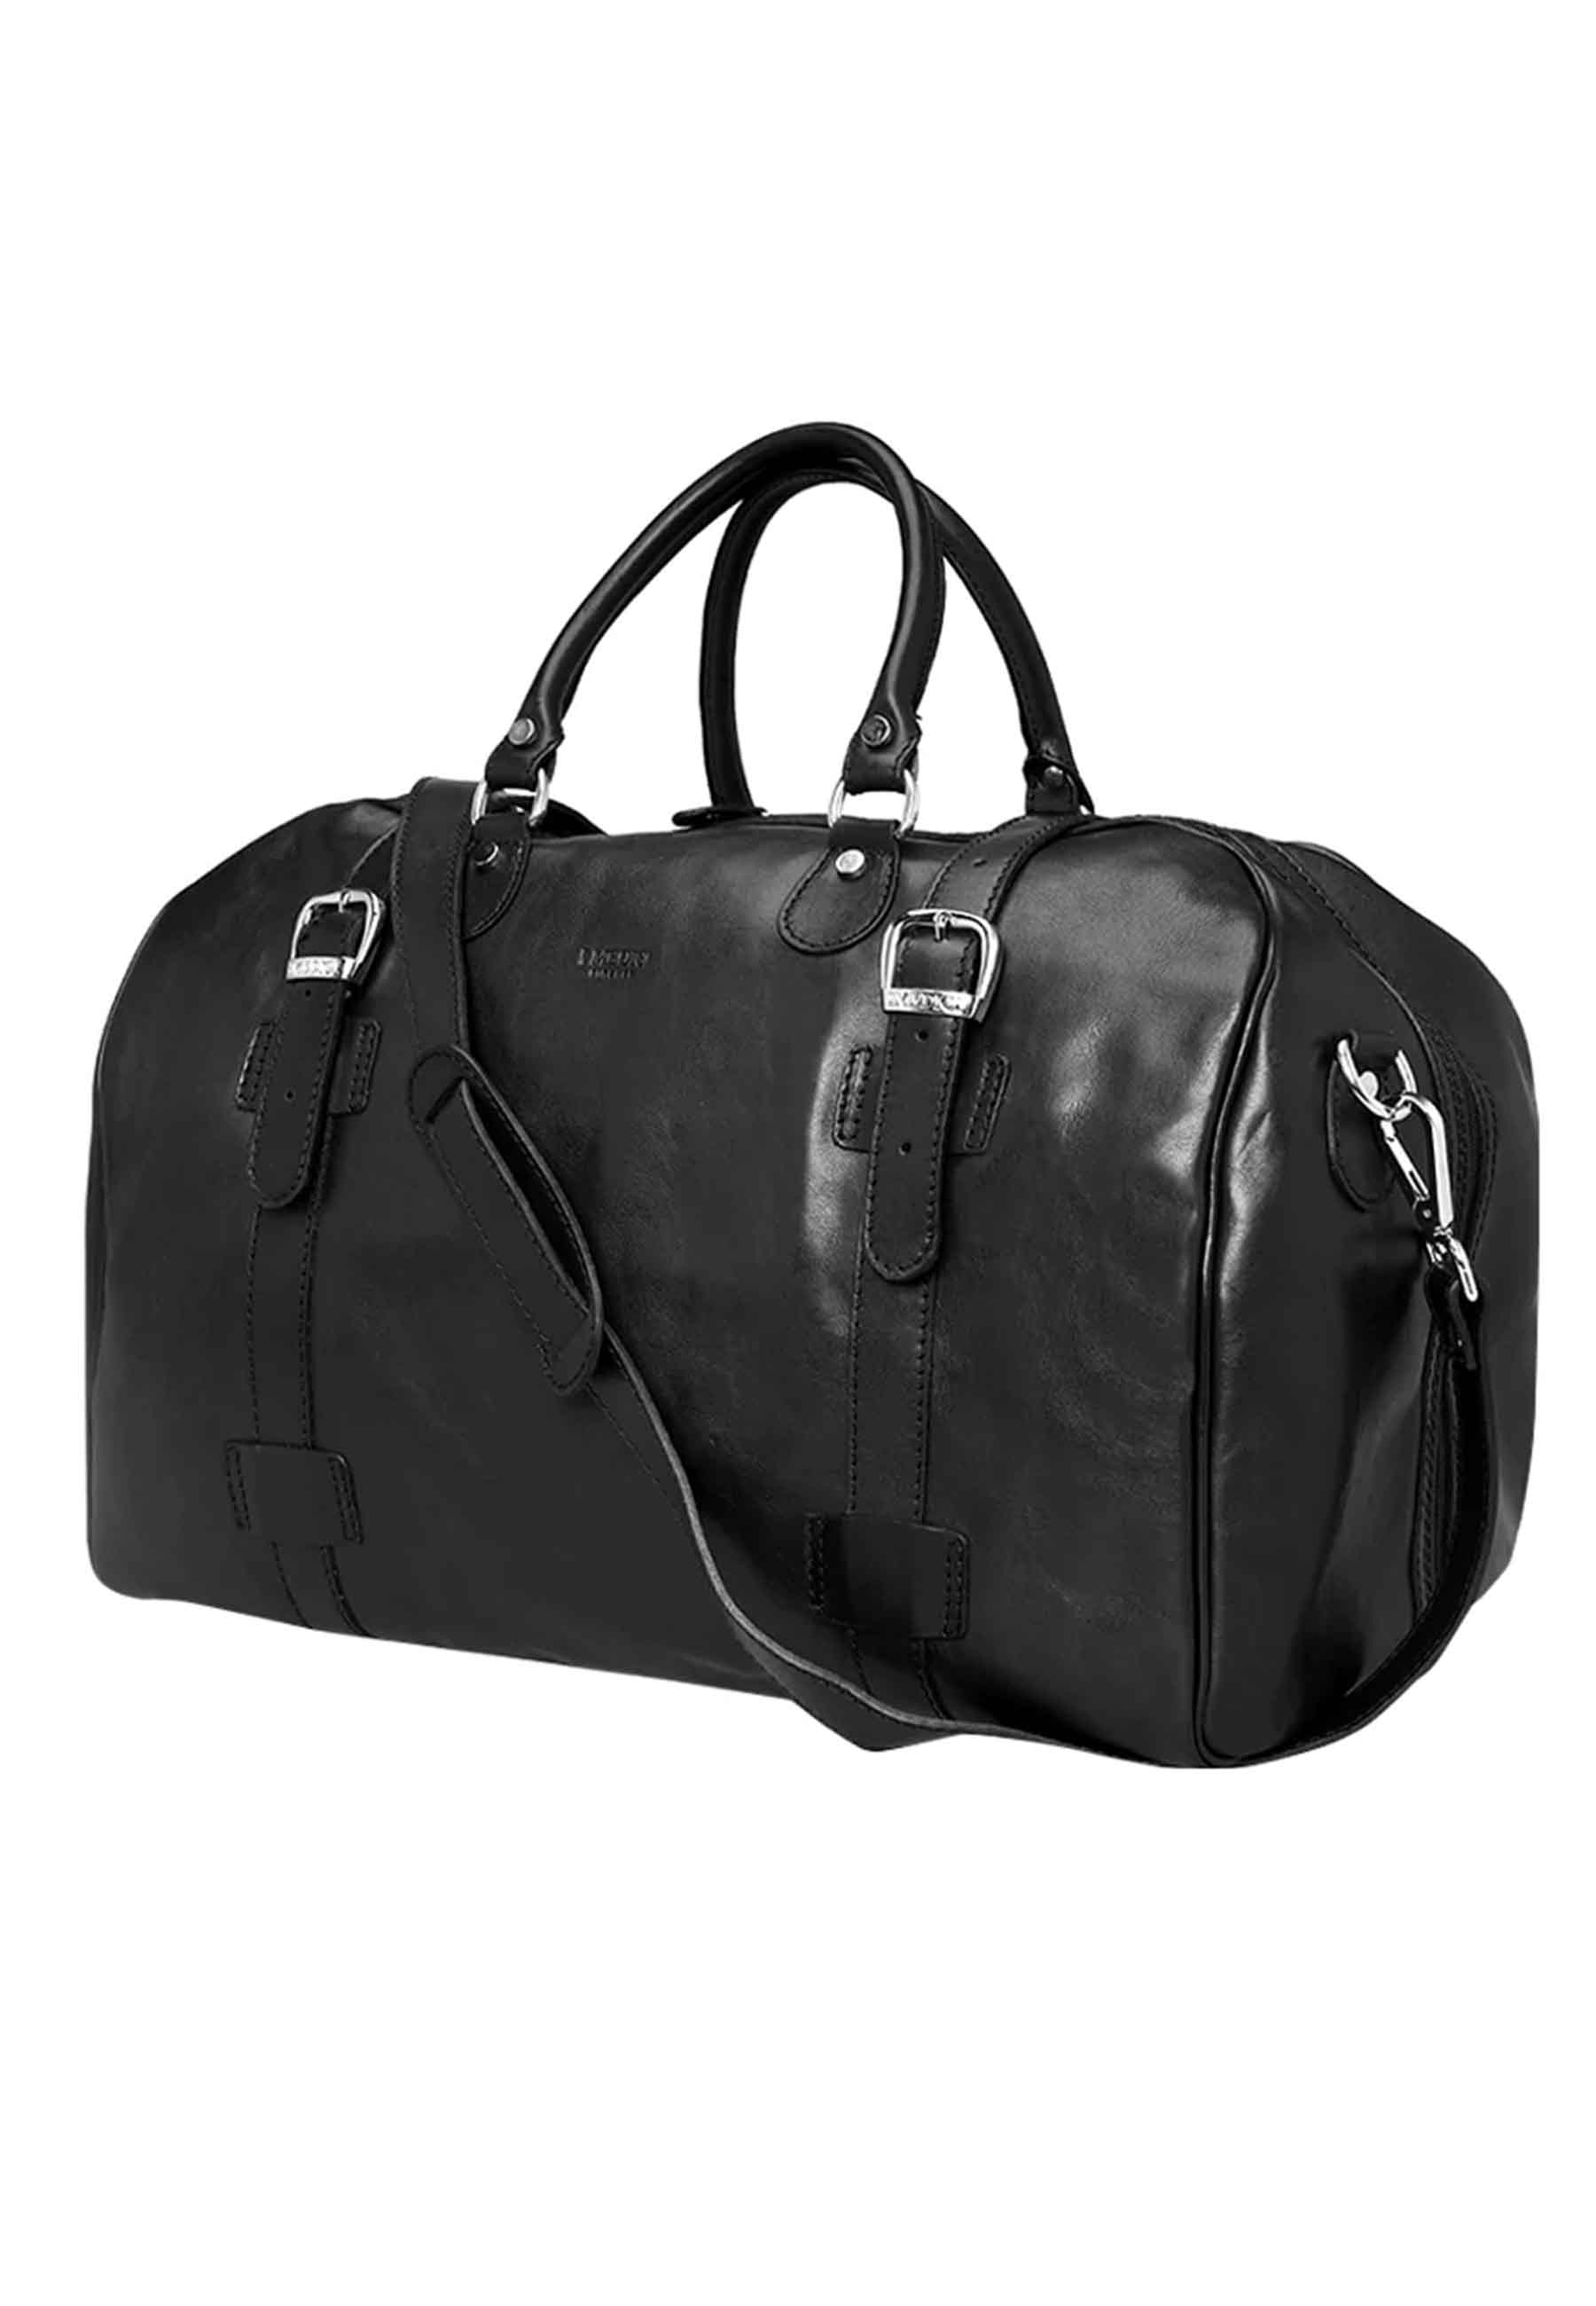 Cabin size men's travel bag in black leather